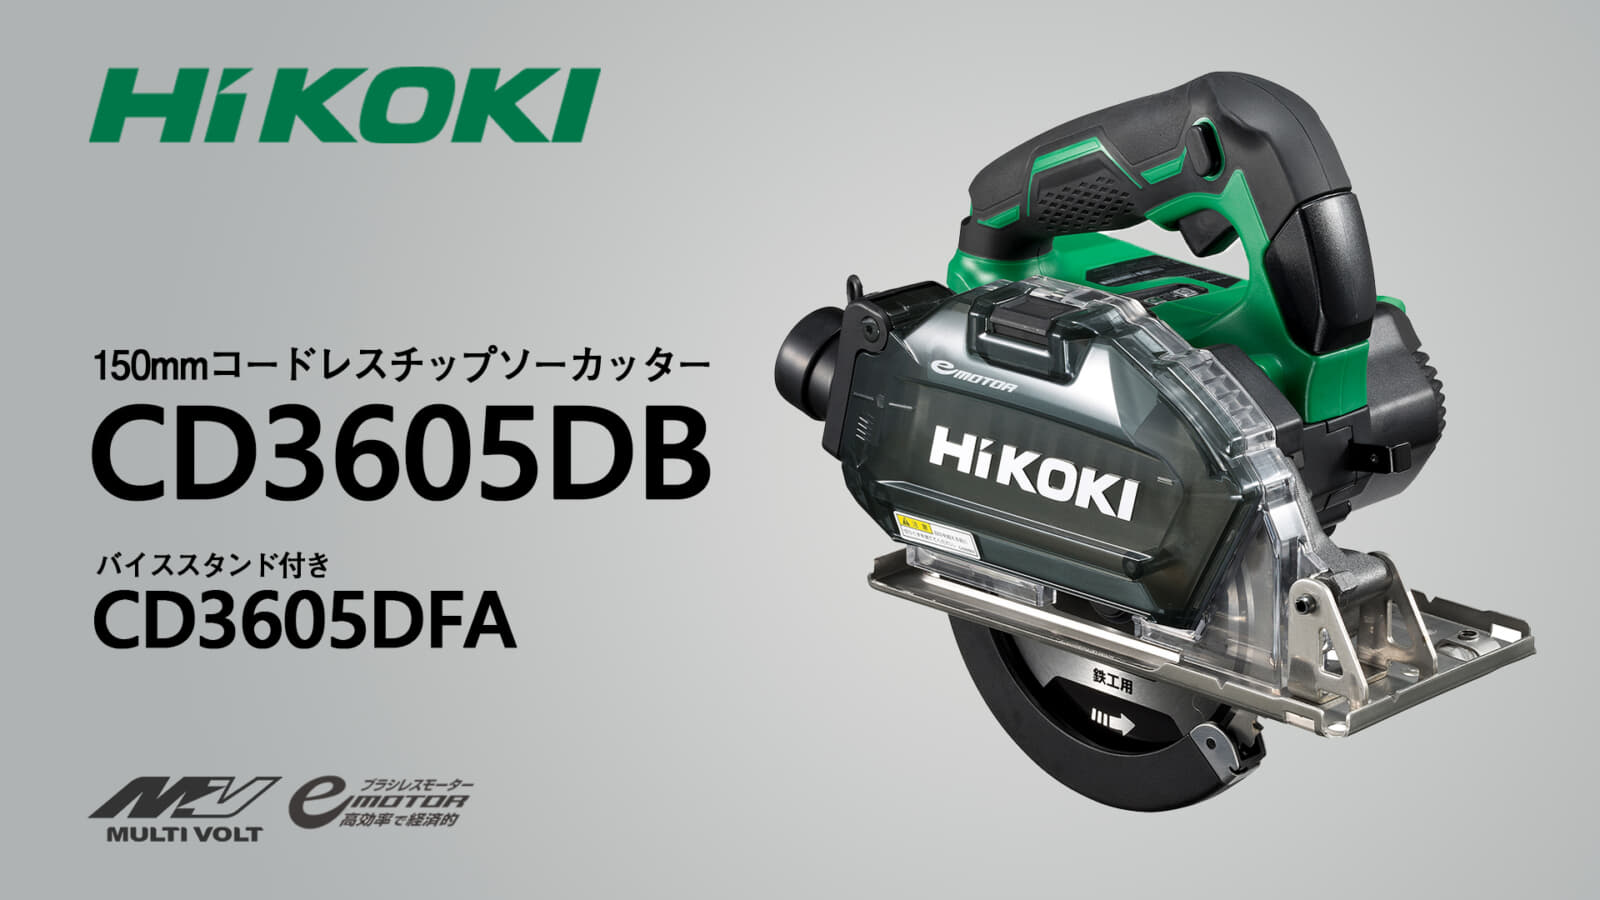 HiKOKI CD3605DB コードレスチップソーカッターを発売、150mm径 